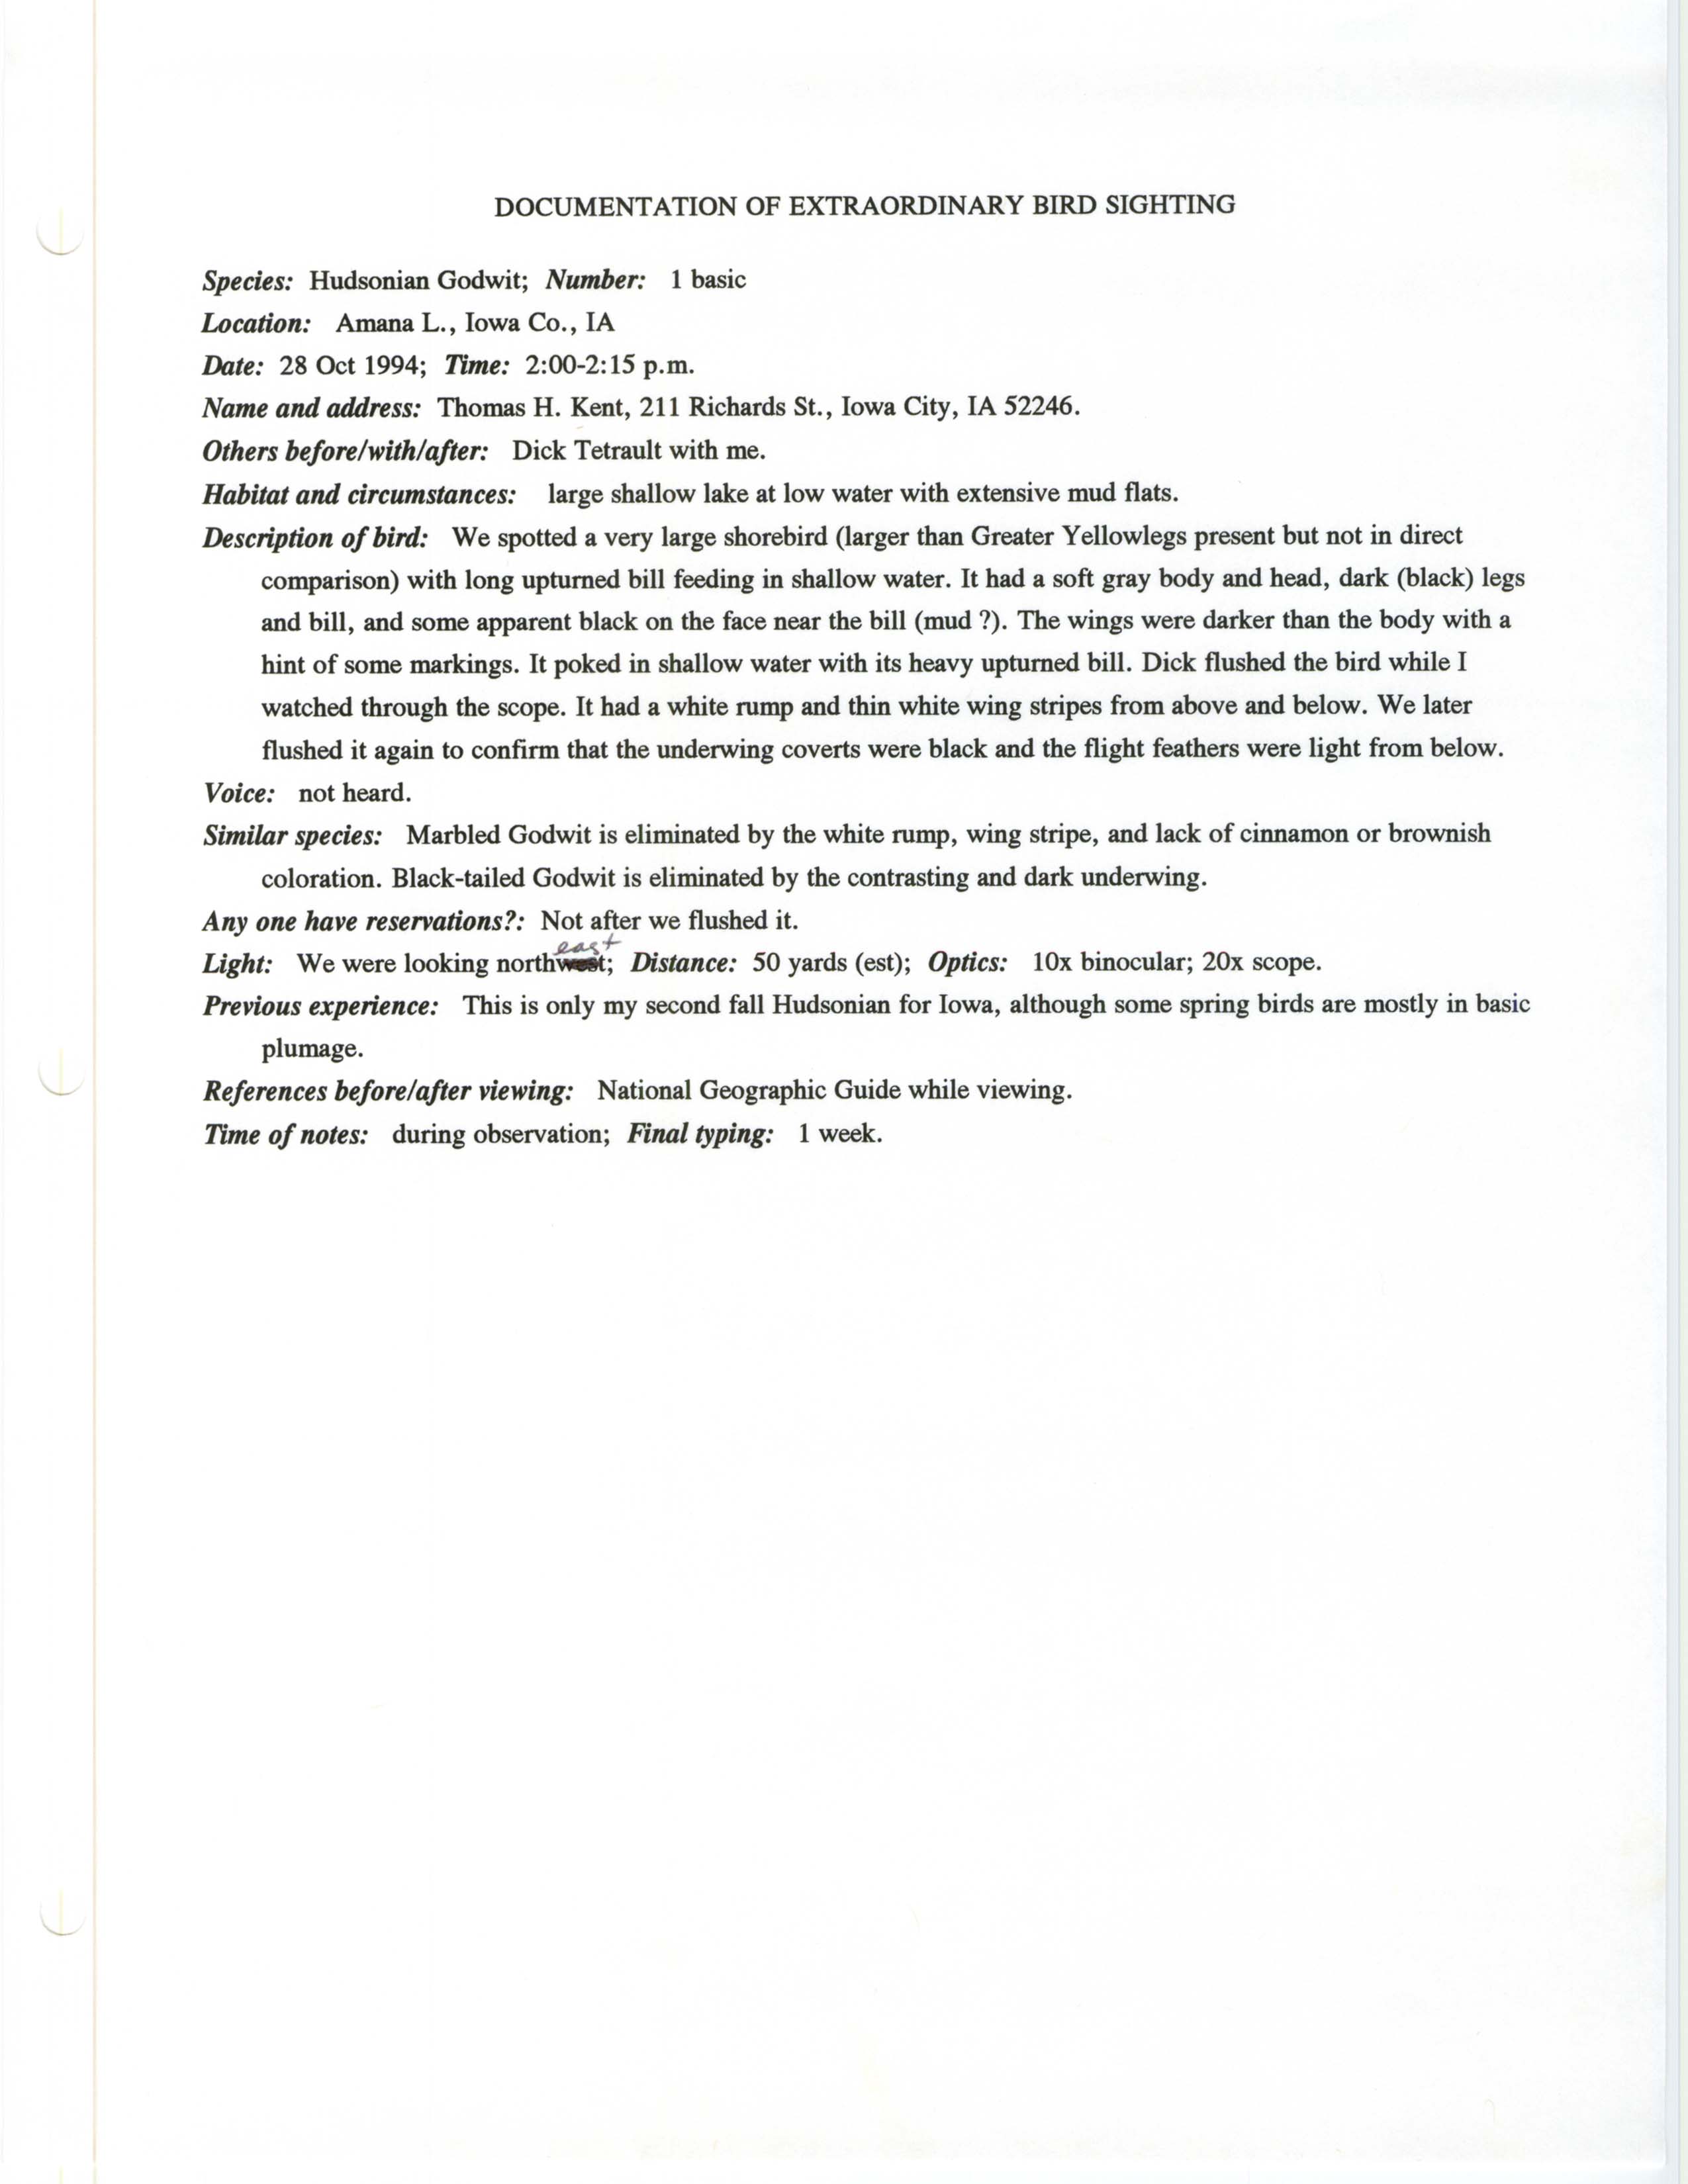 Rare bird documentation form for Hudsonian Godwit at Amana Lake, 1994